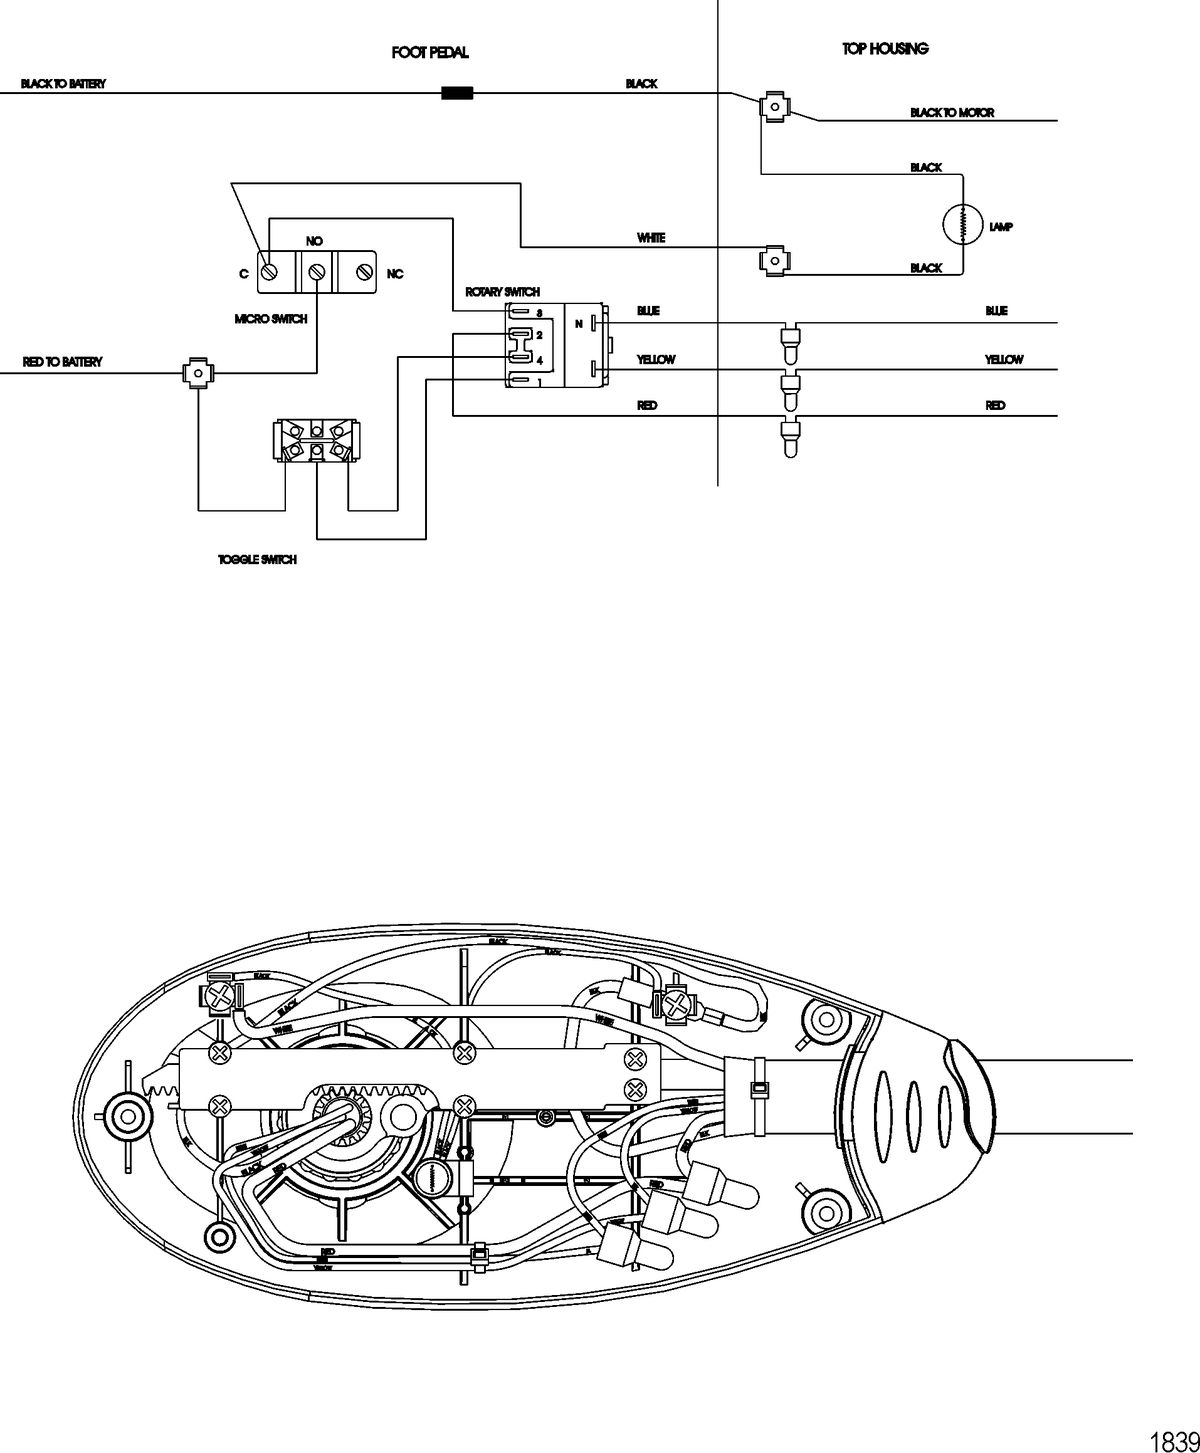 TROLLING MOTOR MOTORGUIDE FRESH WATER SERIES Wire Diagram(Model FW54FB)